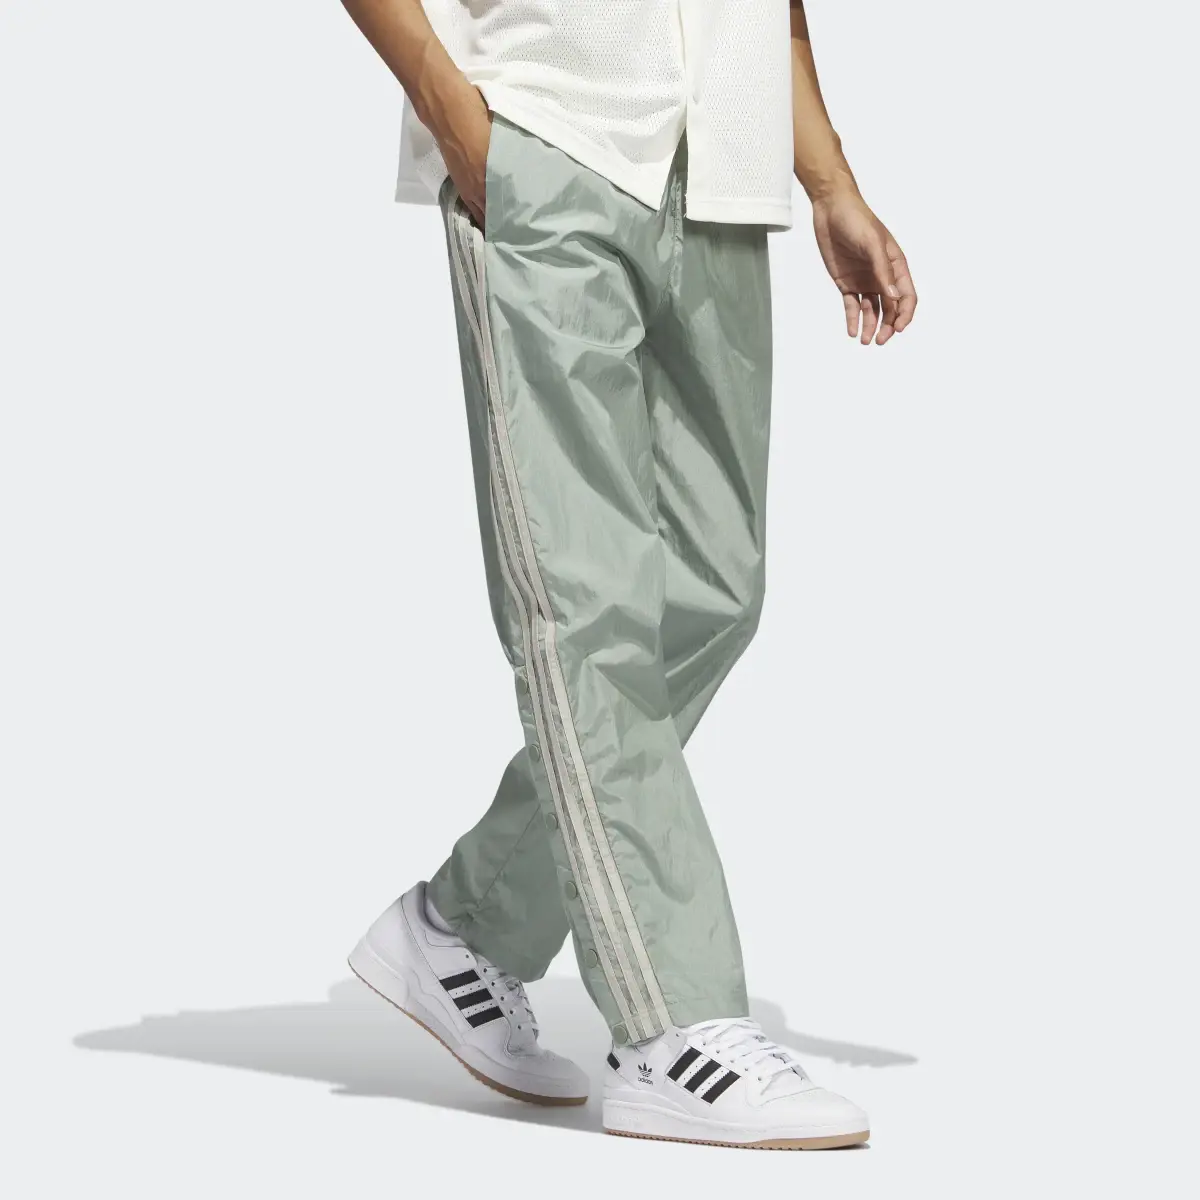 Adidas Basketball Warm-Up Pants. 3